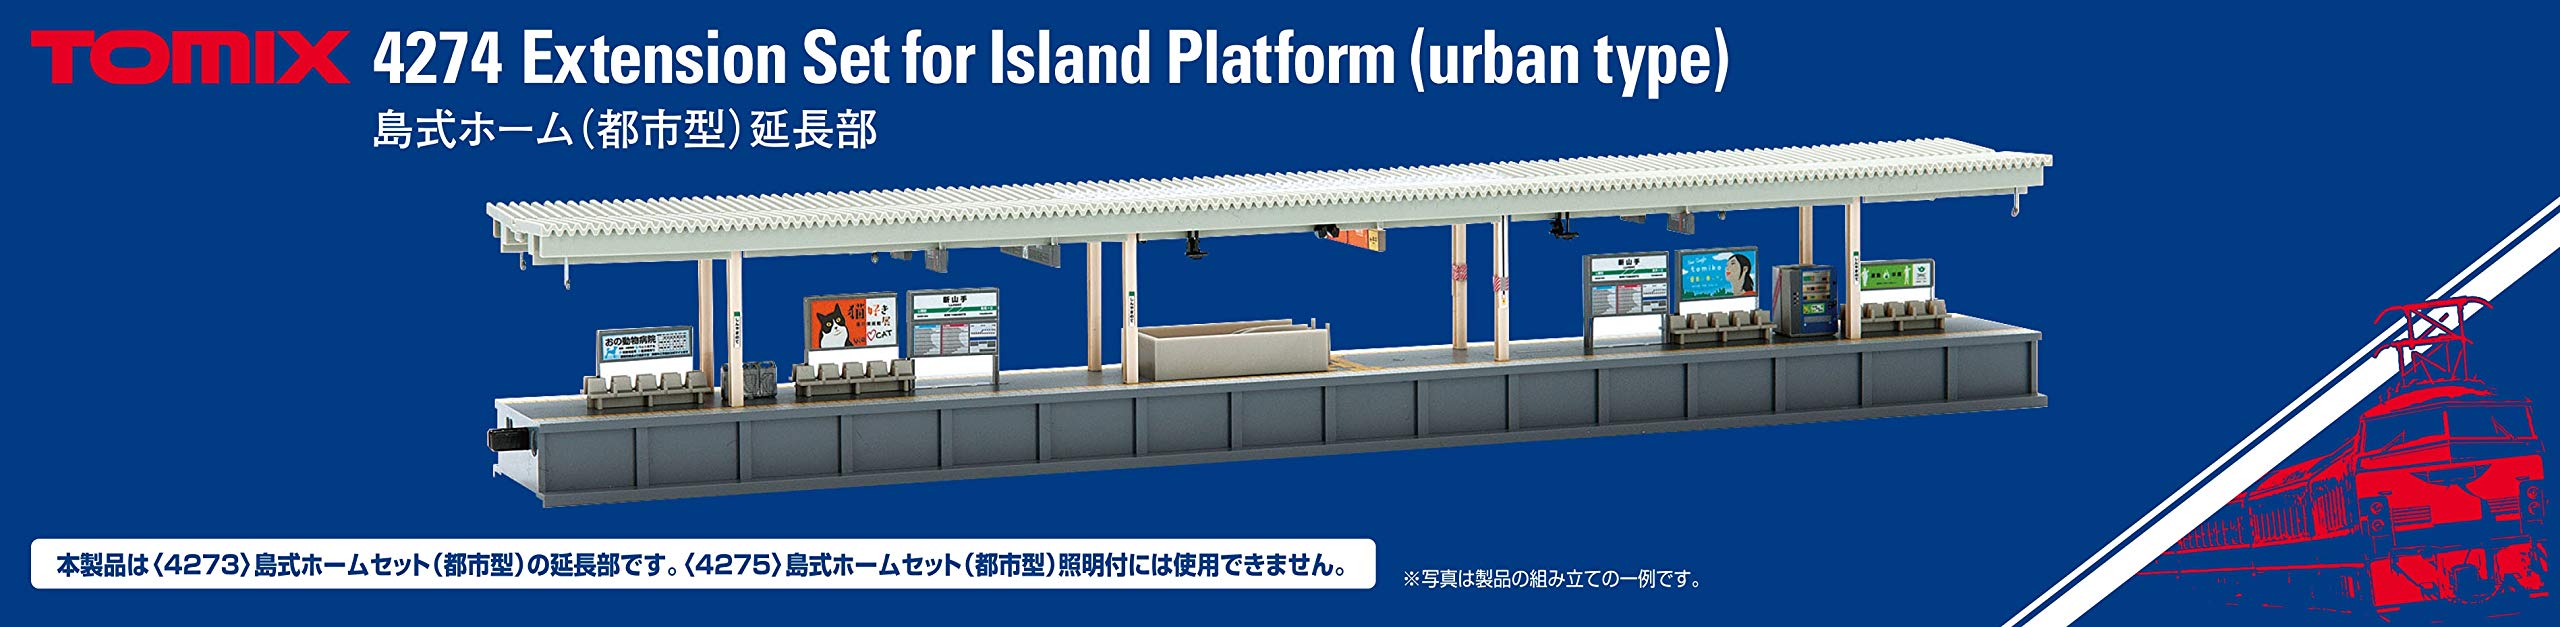 Tomytec Island Platform Urban Extension Part 4274 for N Gauge Railway Models